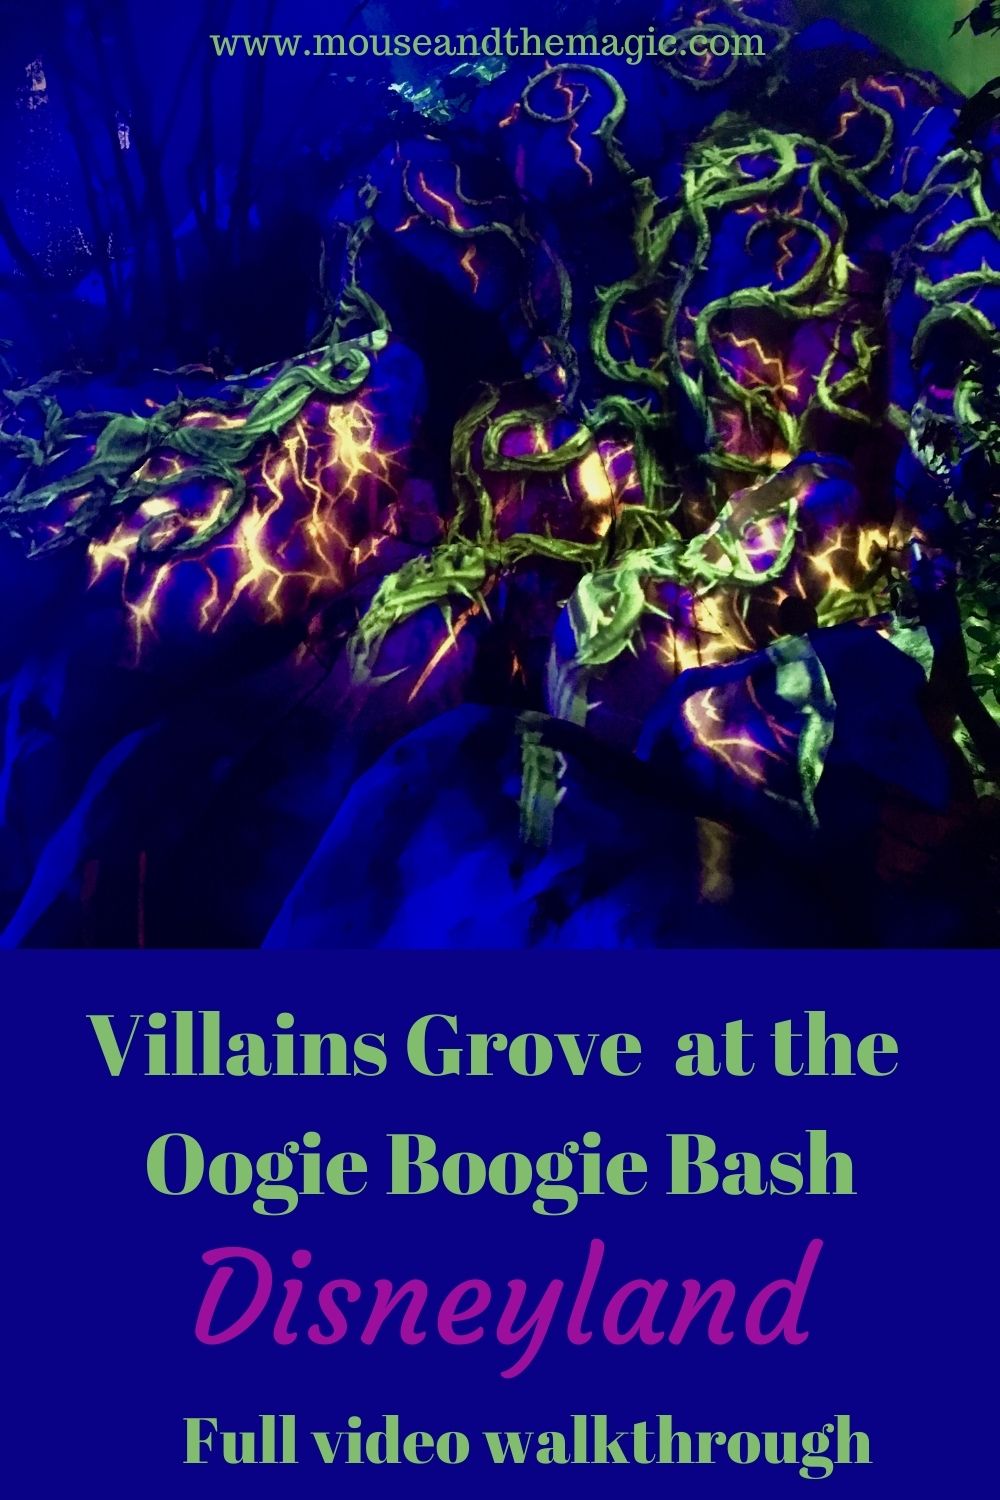 Villains Grove at the Oogie Boogie Bash - Full video walkthrough